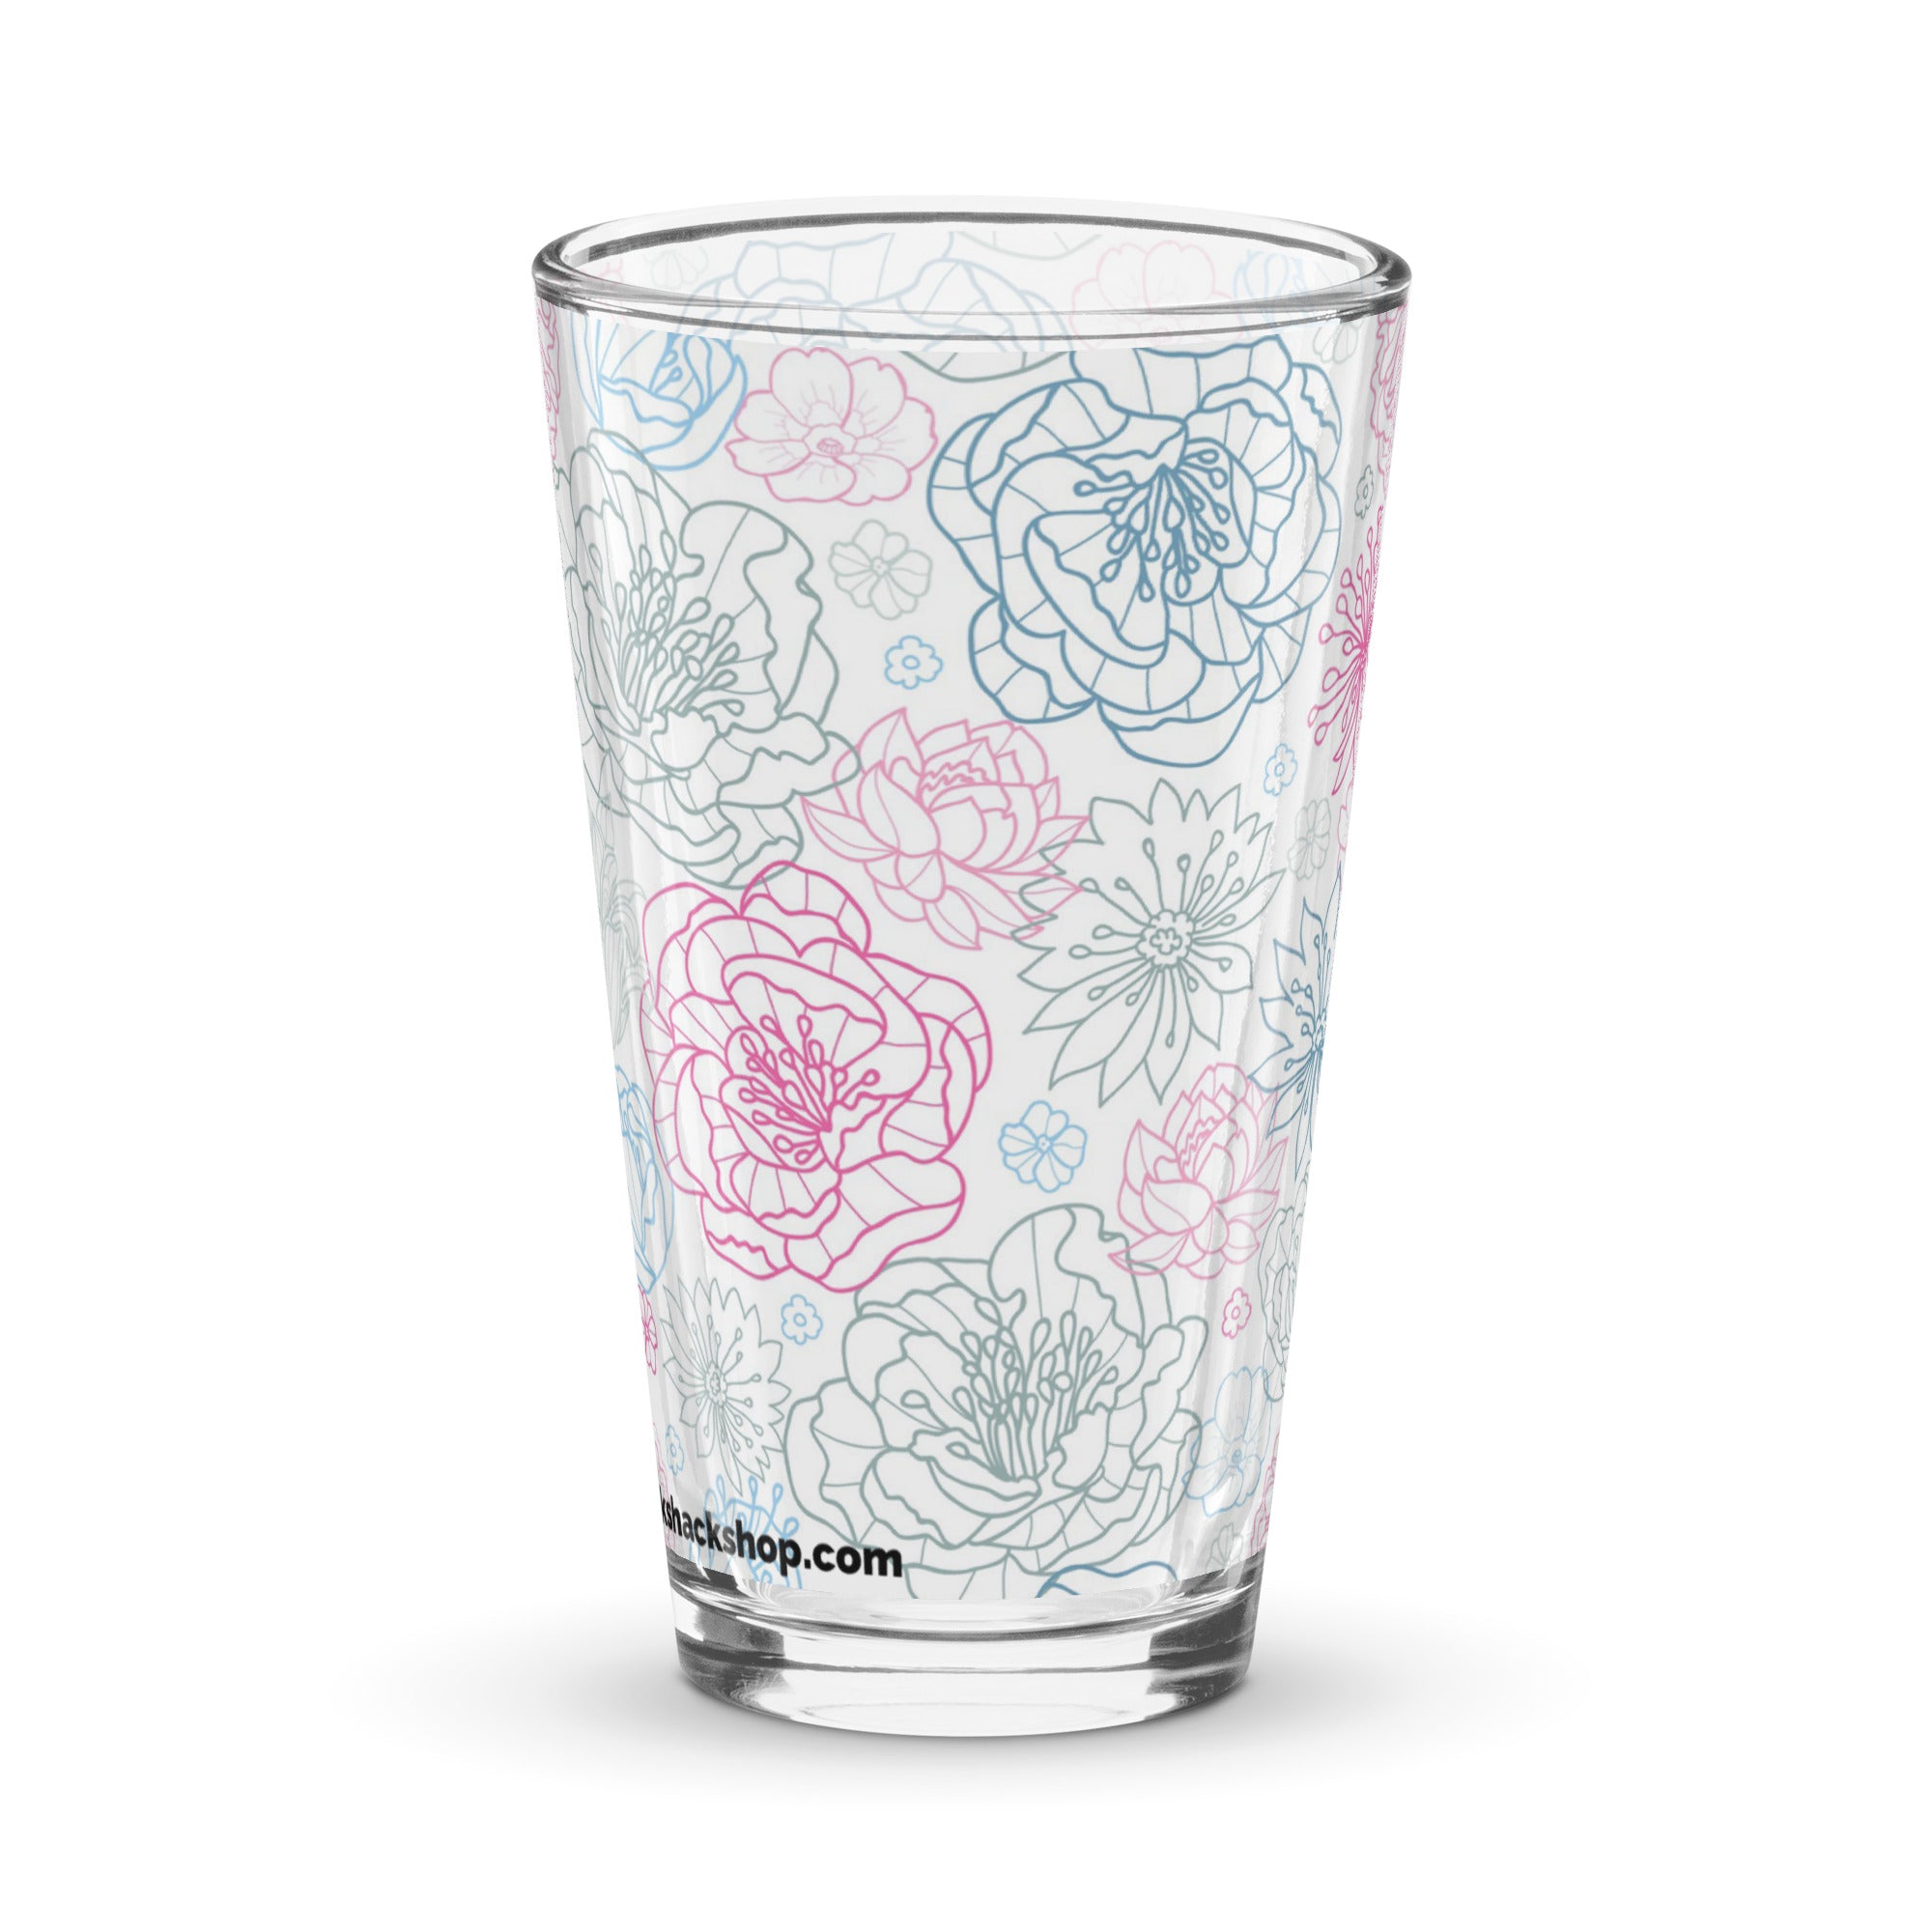 Shaker Pint Glass (16oz) - Floral Medley